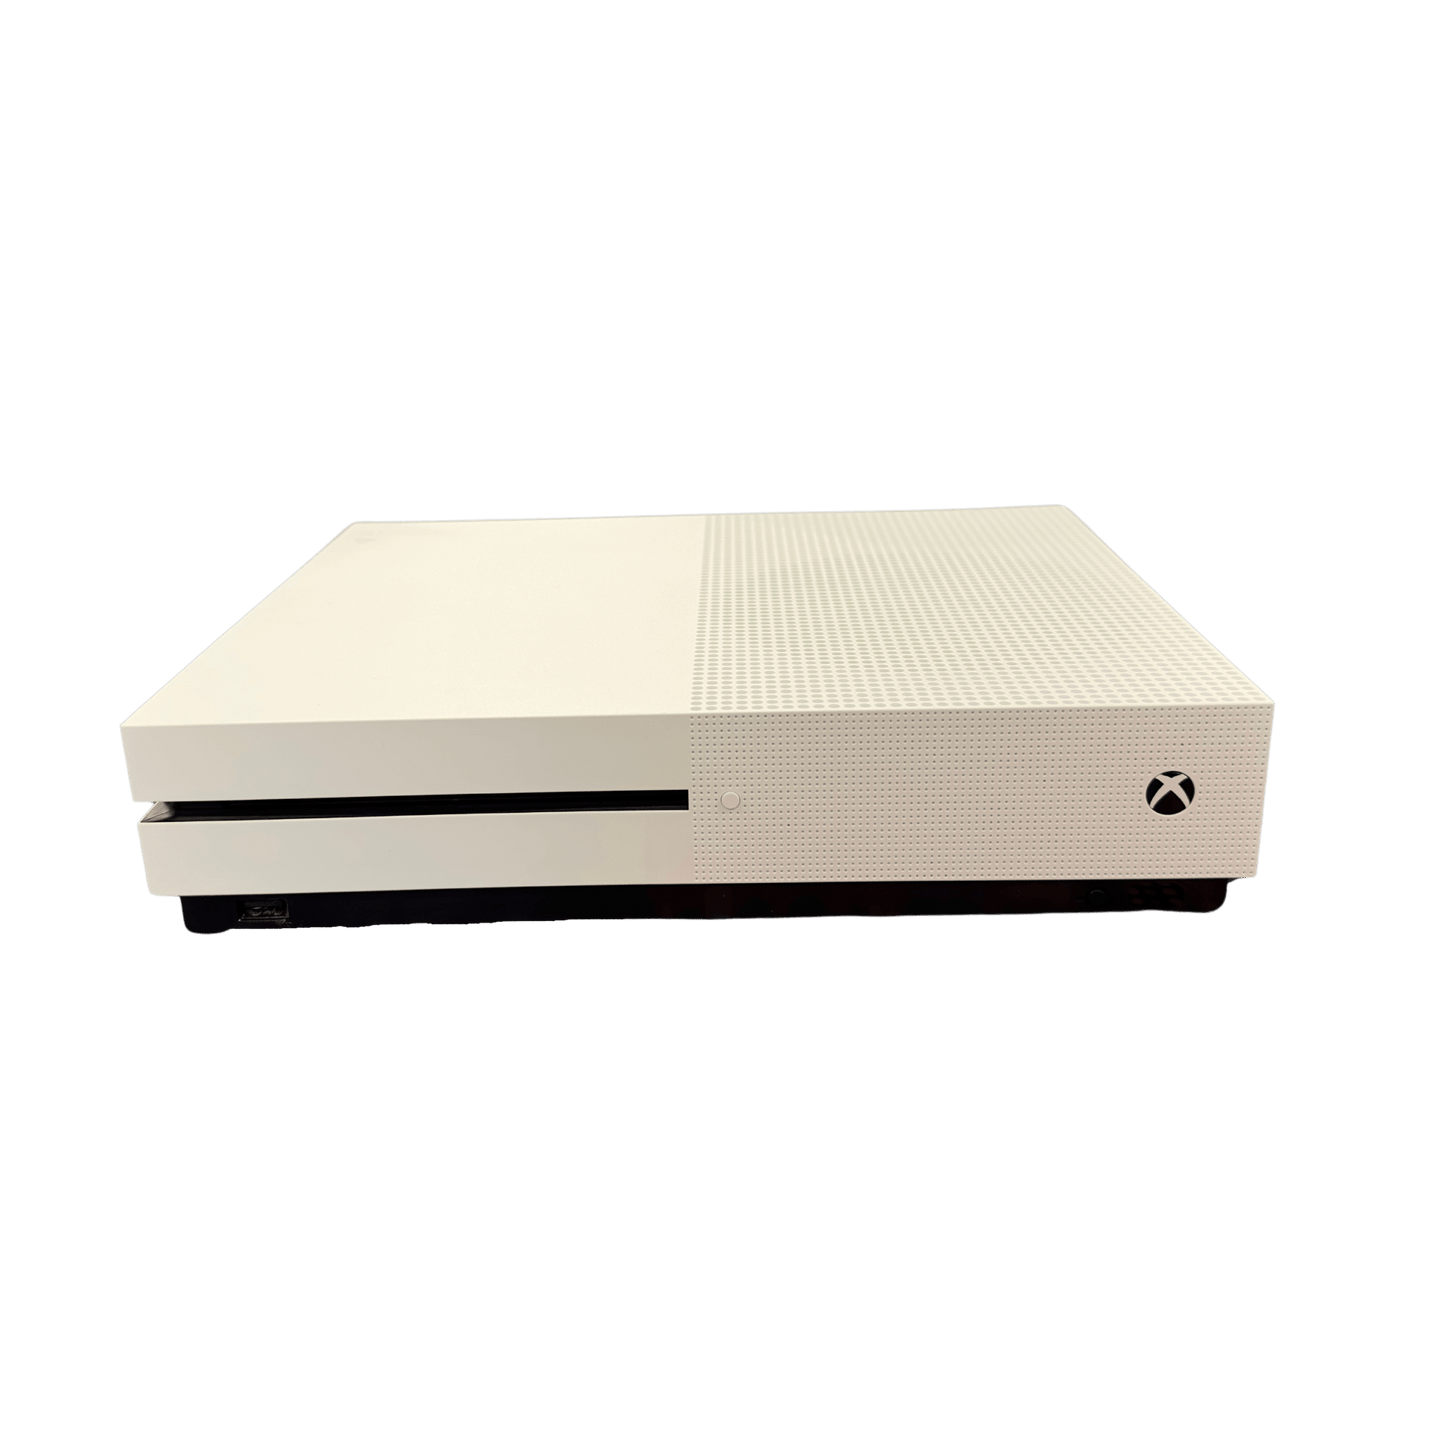 Refurbished Xbox One S Console - 500GB HDD - East Texas Electronics LLC.